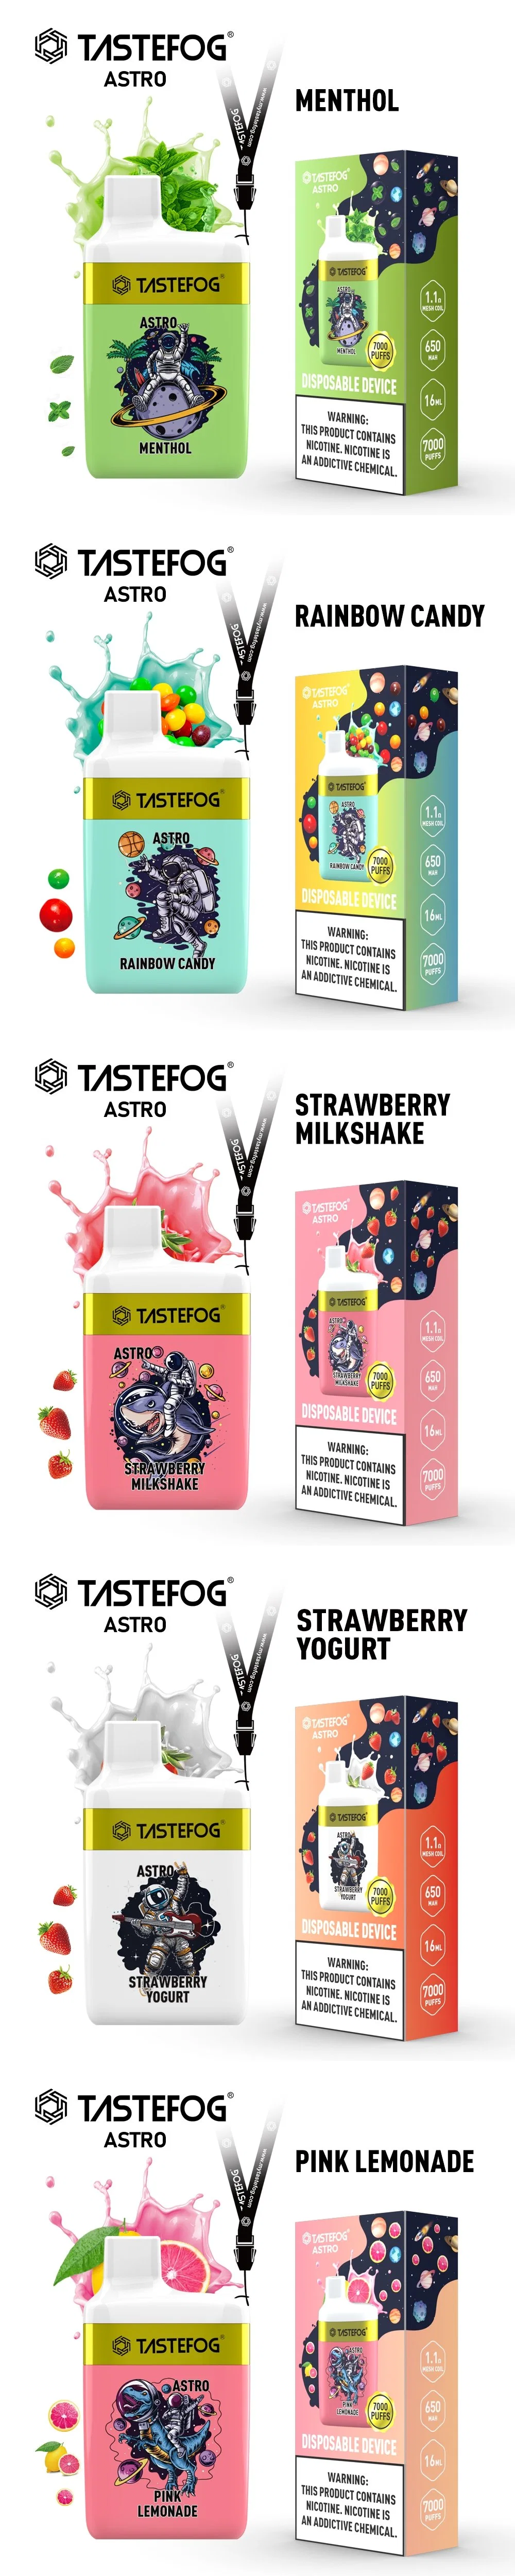 Tastefog Astro 7000 Puffs Rechargeable Mass E Cigarette Vape Online Store